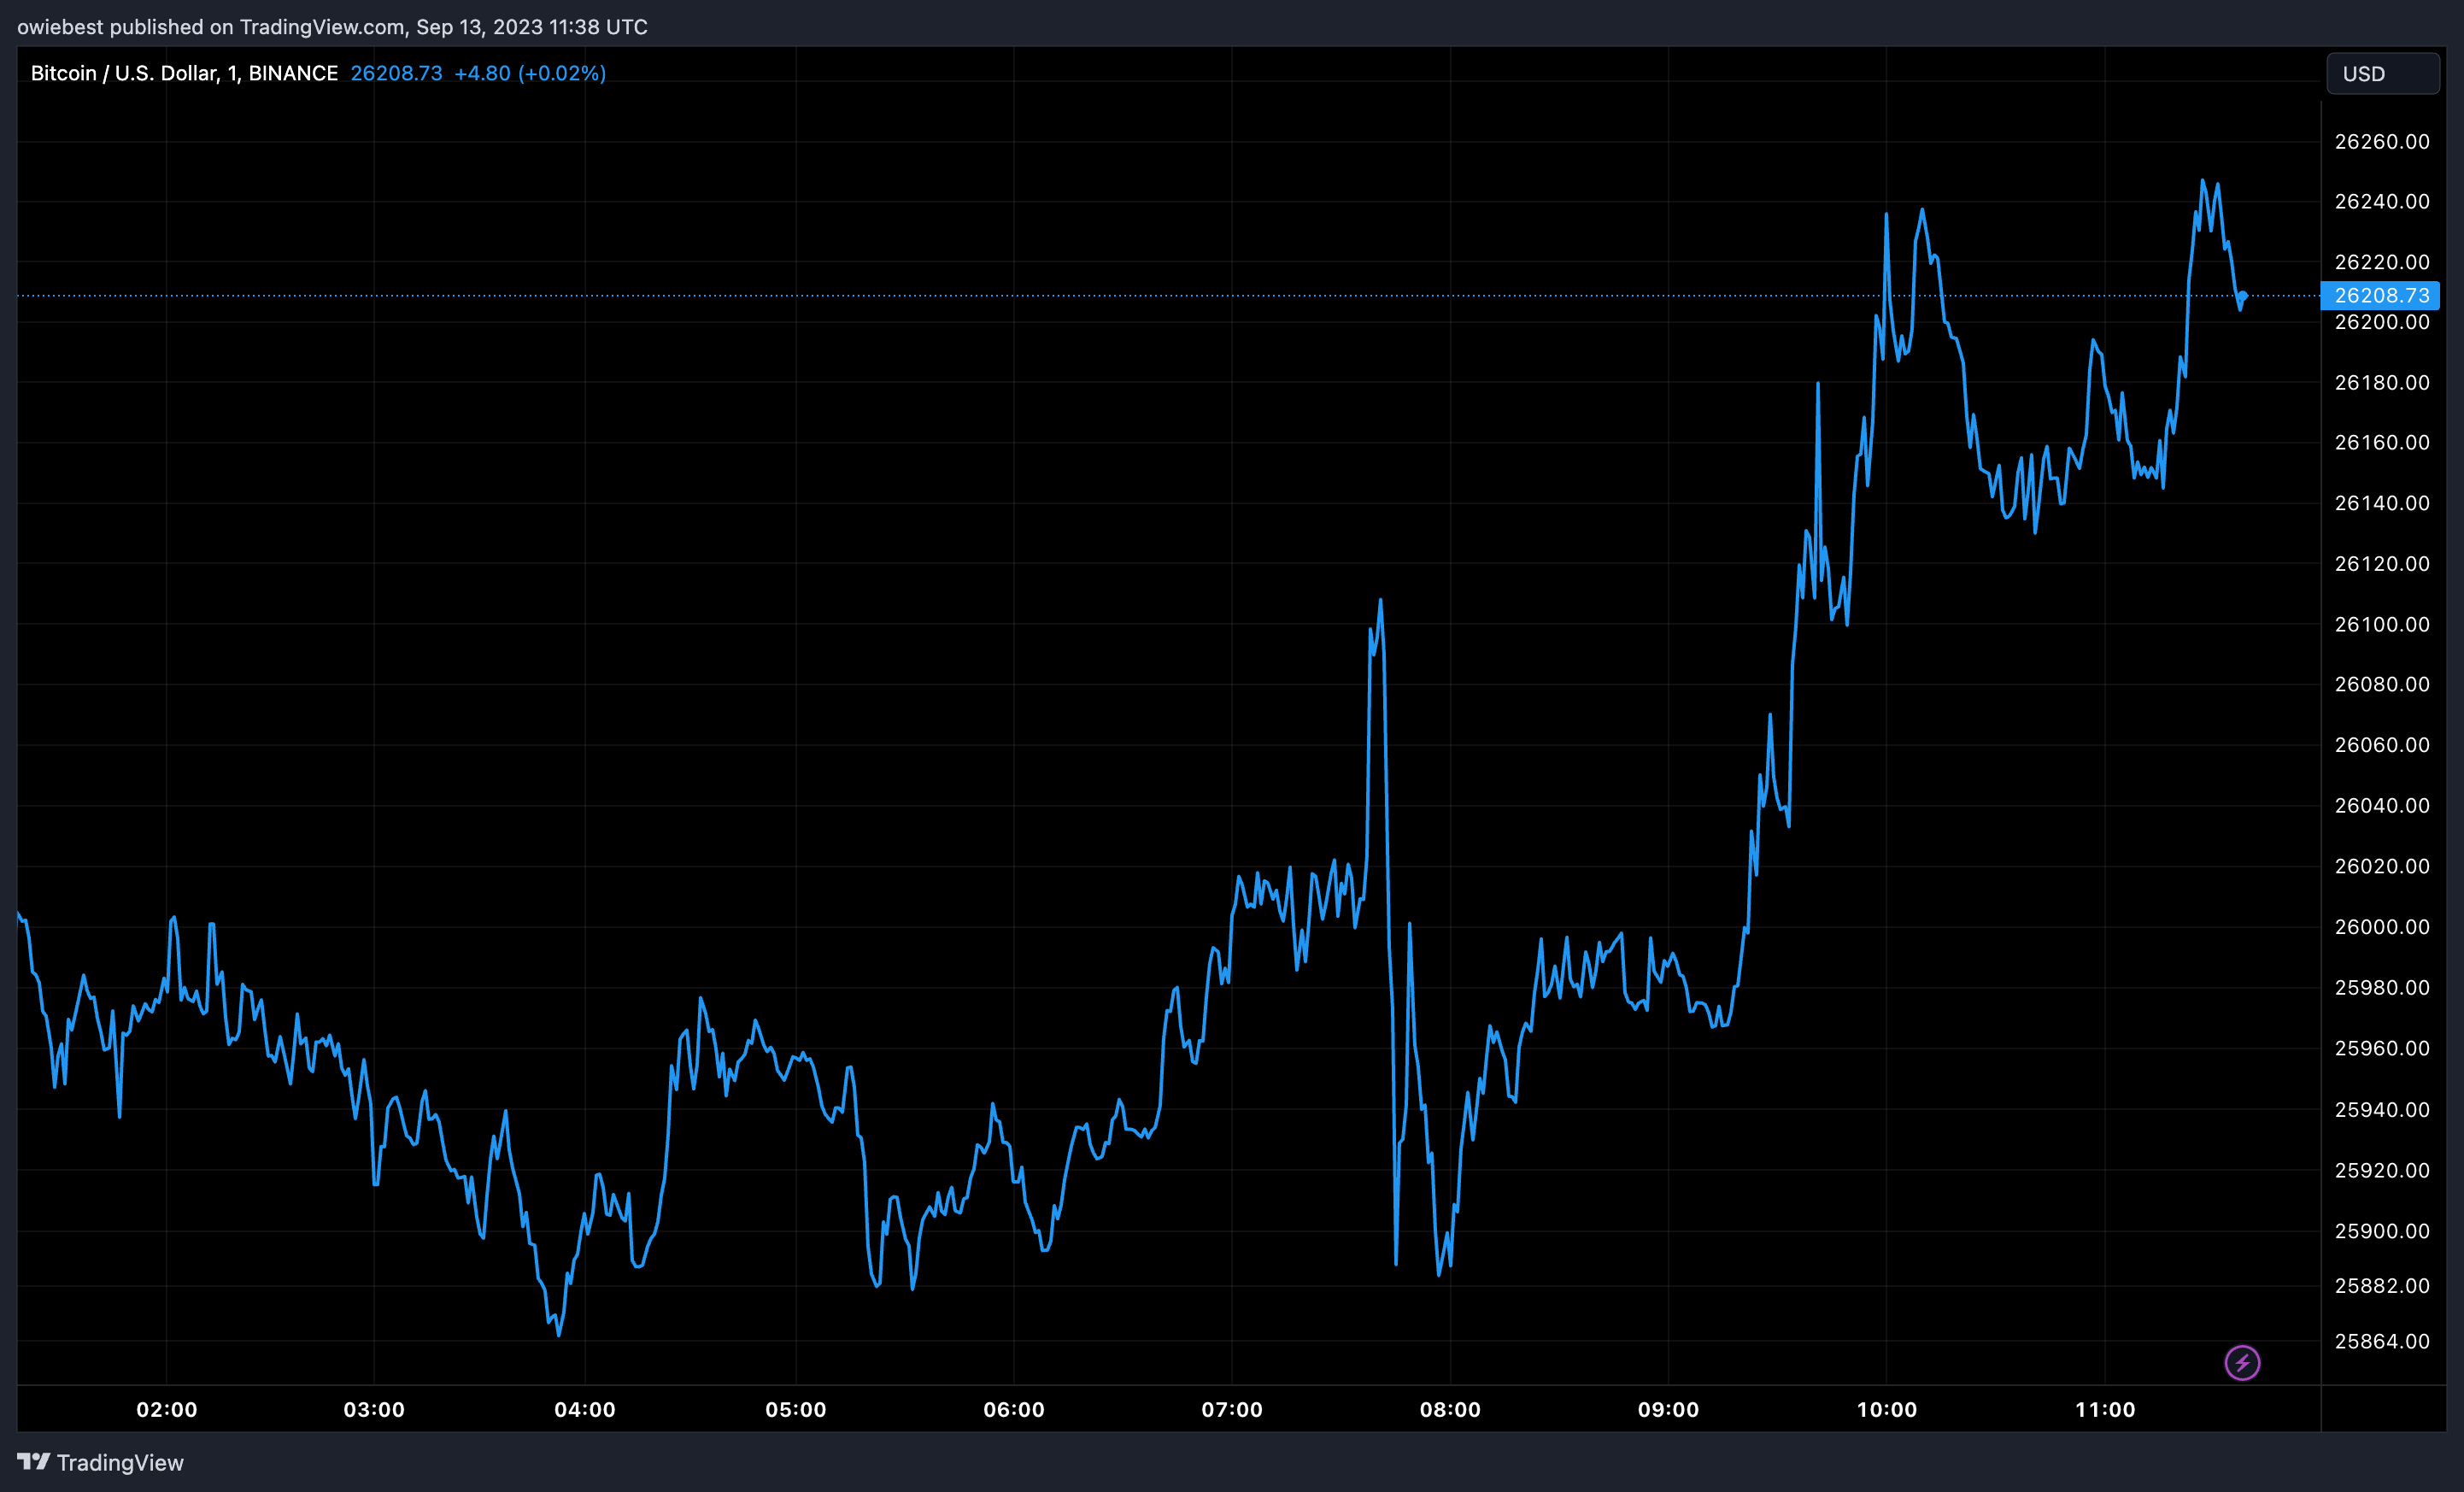 График цен Bitcoin BTC от Tradingview.com (кошельки)